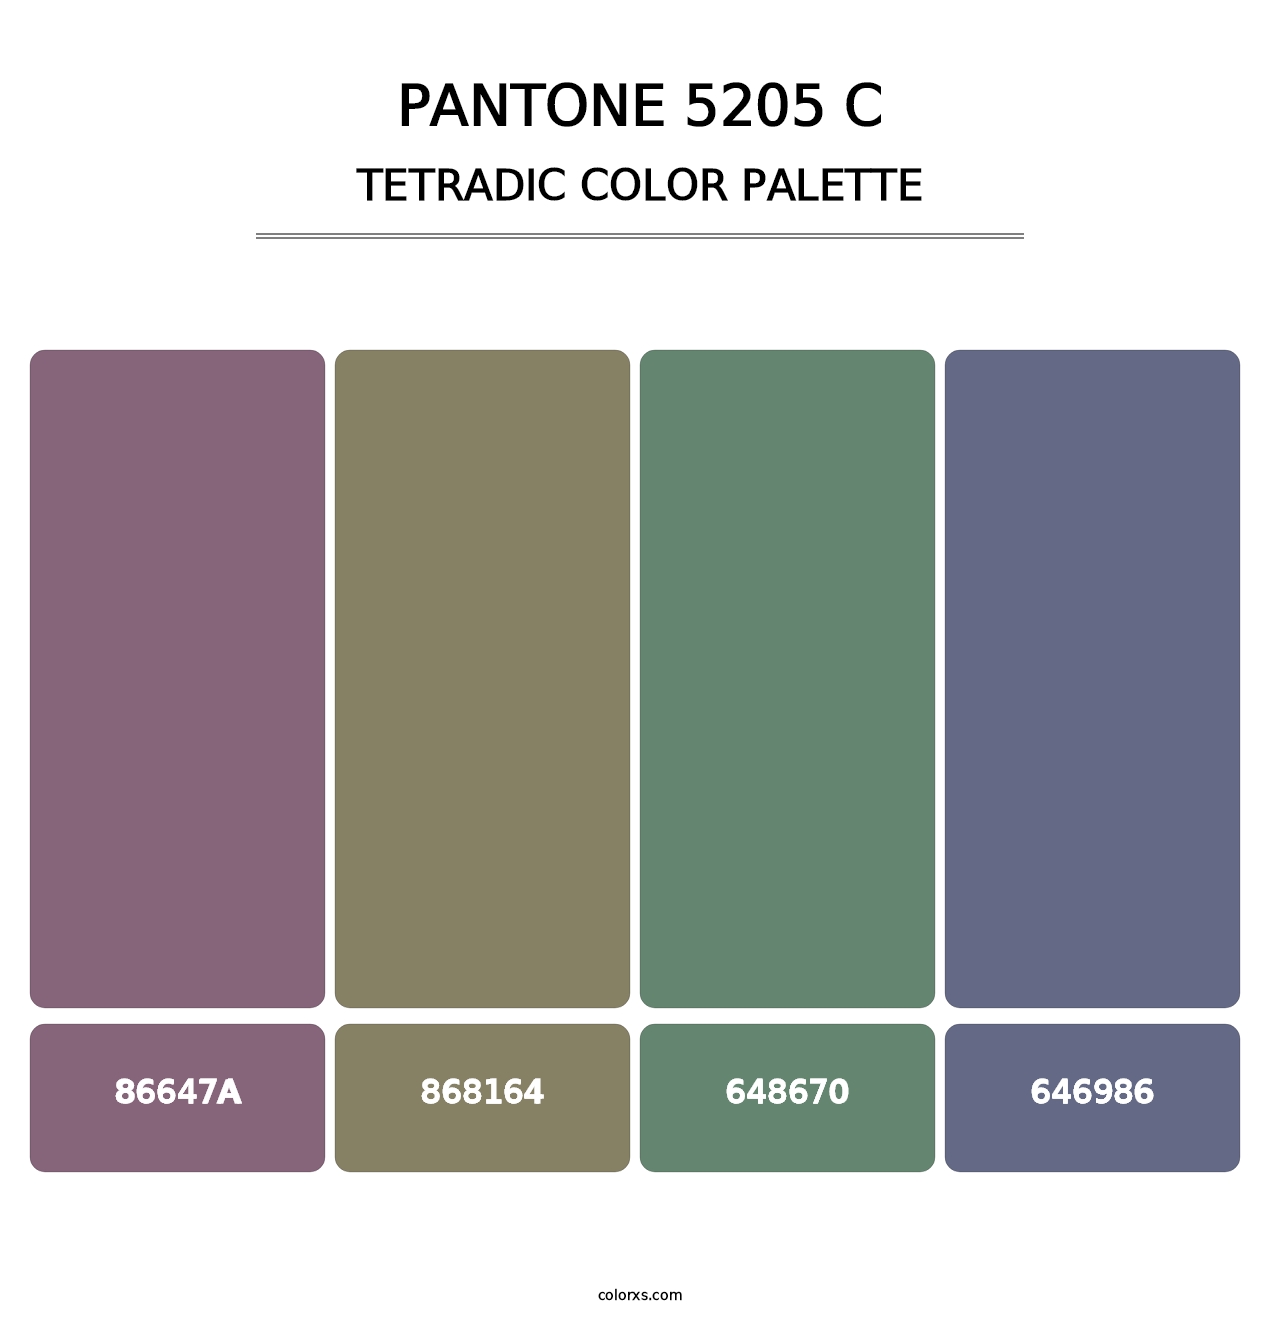 PANTONE 5205 C - Tetradic Color Palette